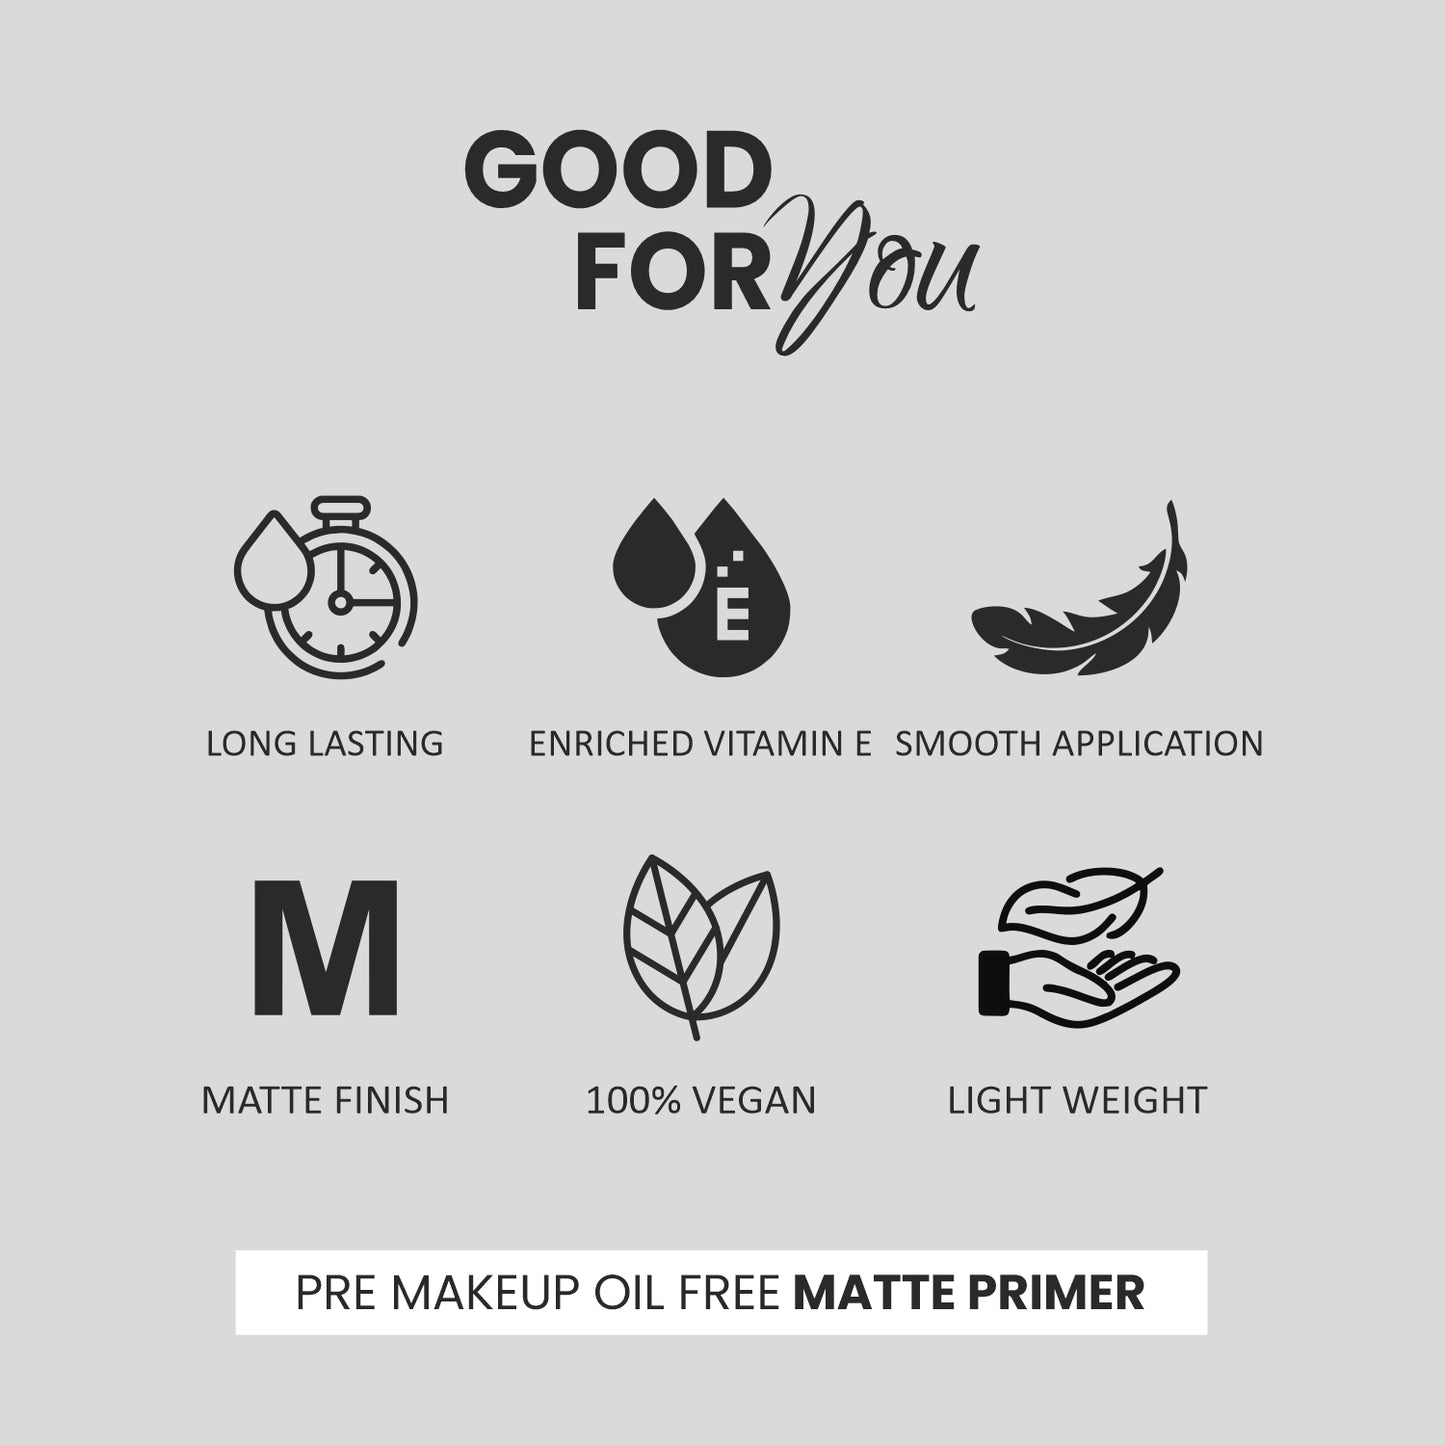 Pre Makeup Oil Free Matte Primer